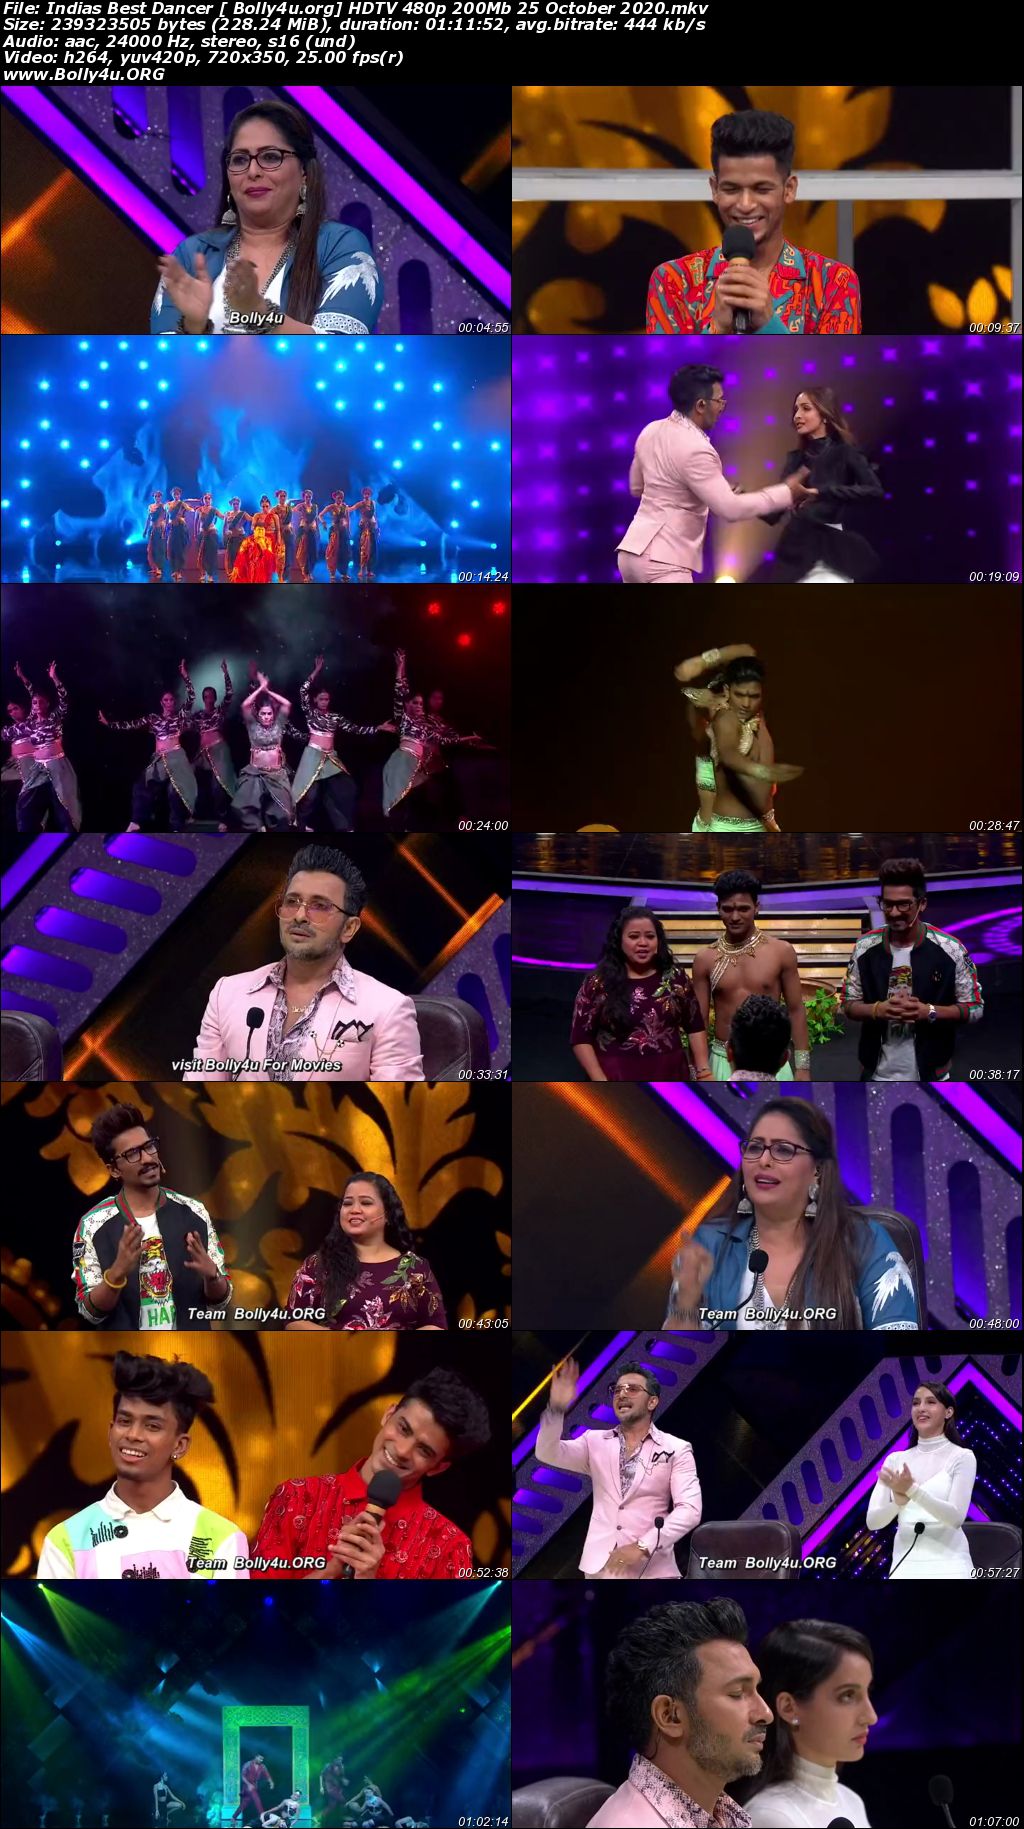 Indias Best Dancer HDTV 480p 200Mb 25 October 2020 Download